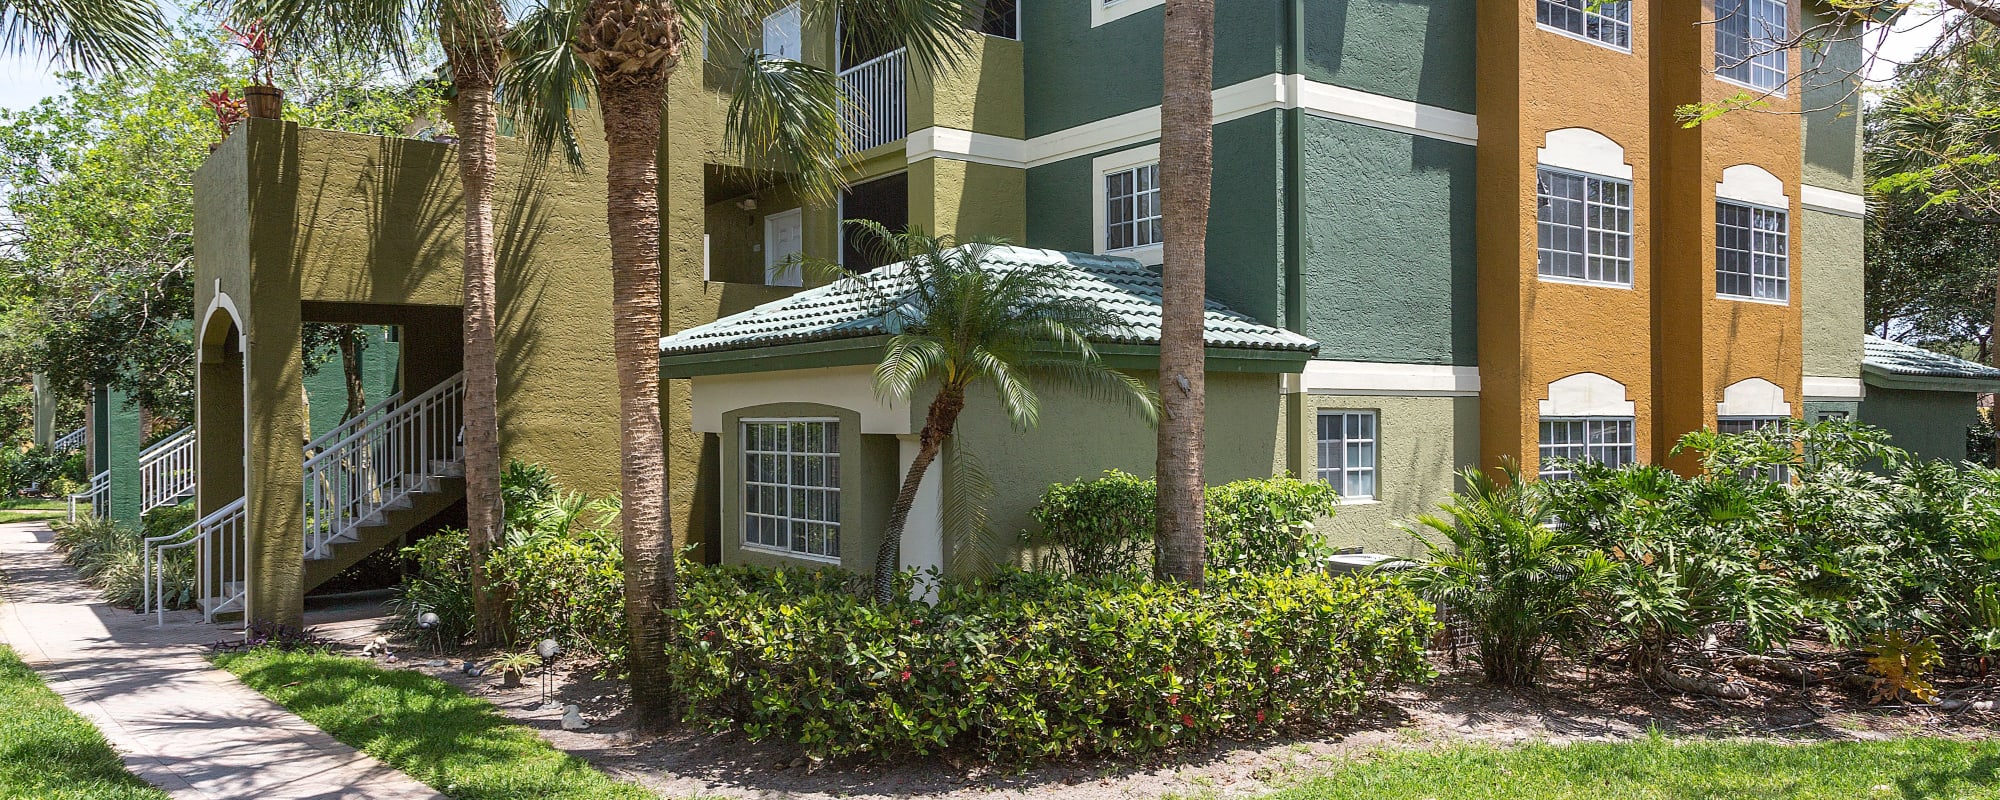 Neighborhood of Weston Place Apartments in Weston, Florida